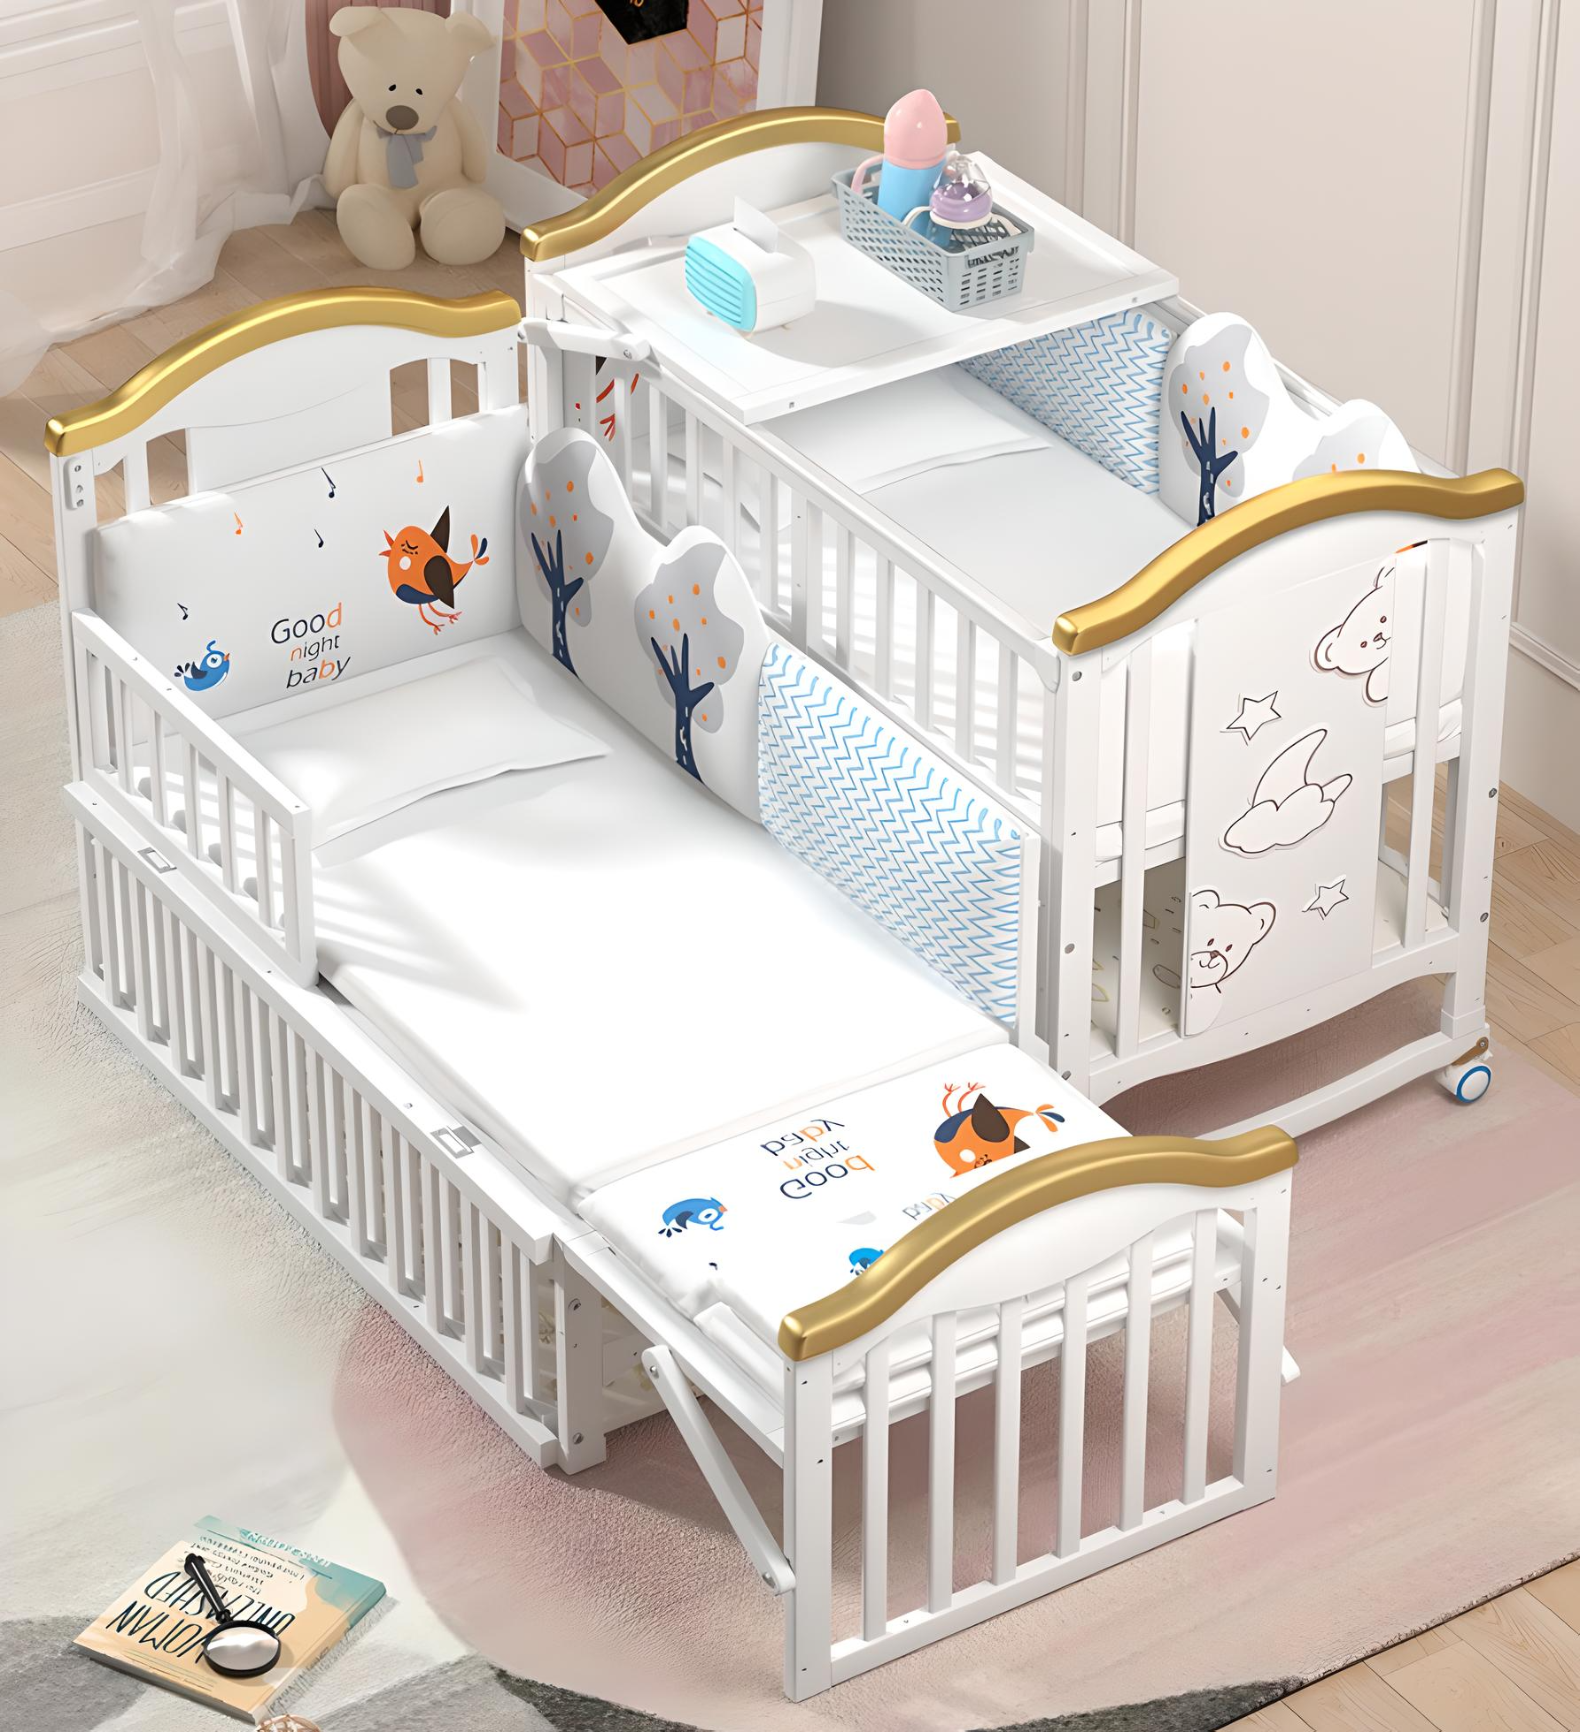 Minikin Emperia Co-Sleeping Extendable Wooden Crib I Mattress & Bumper Bed I NB - 6 Years